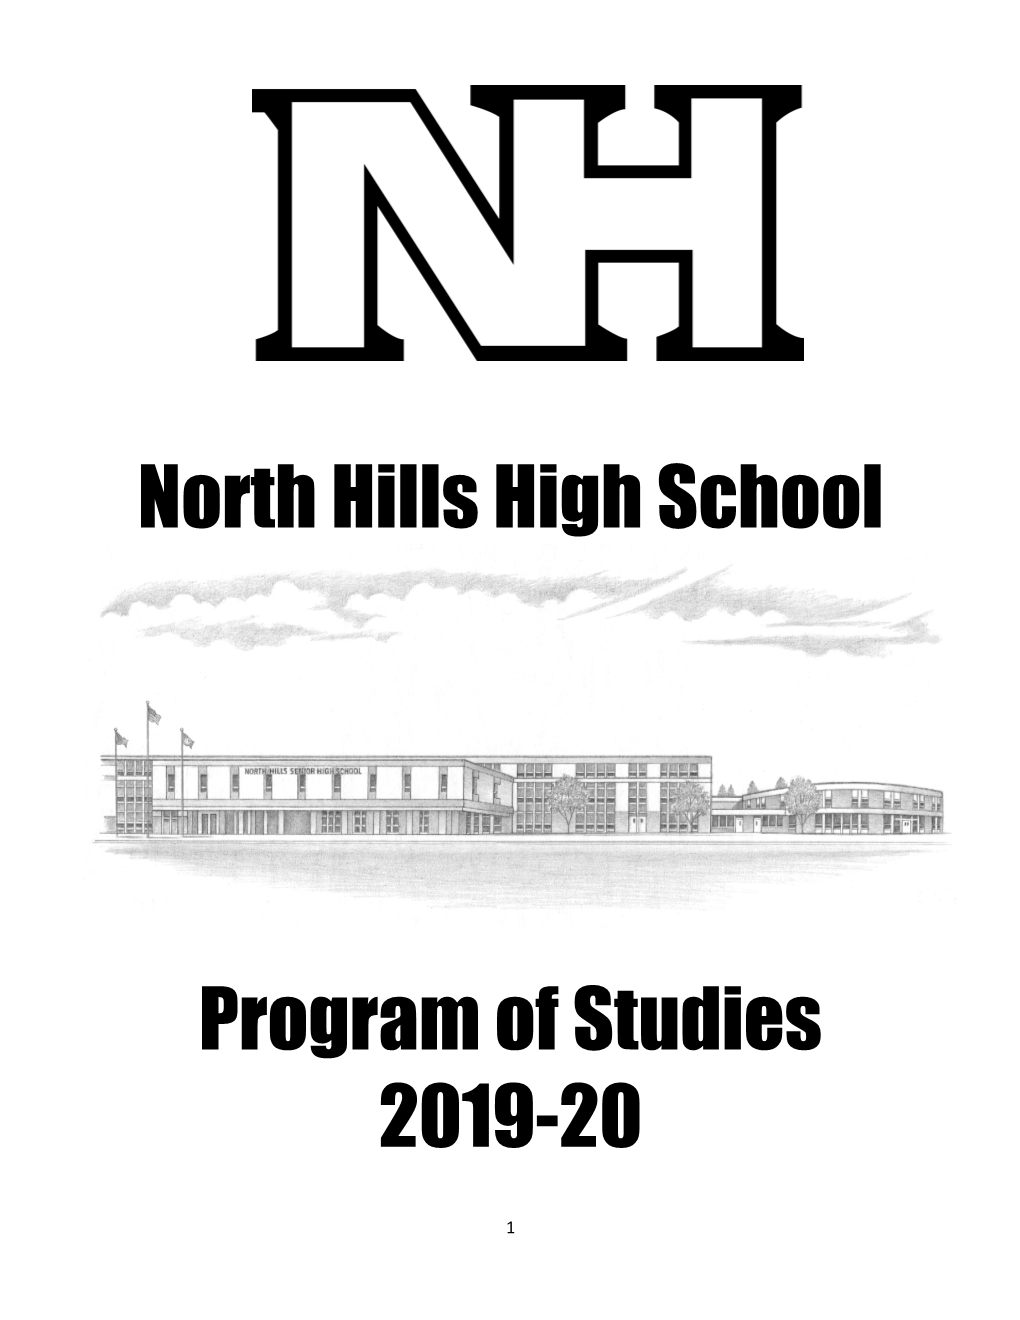 North Hills High School Program of Studies 2019-20